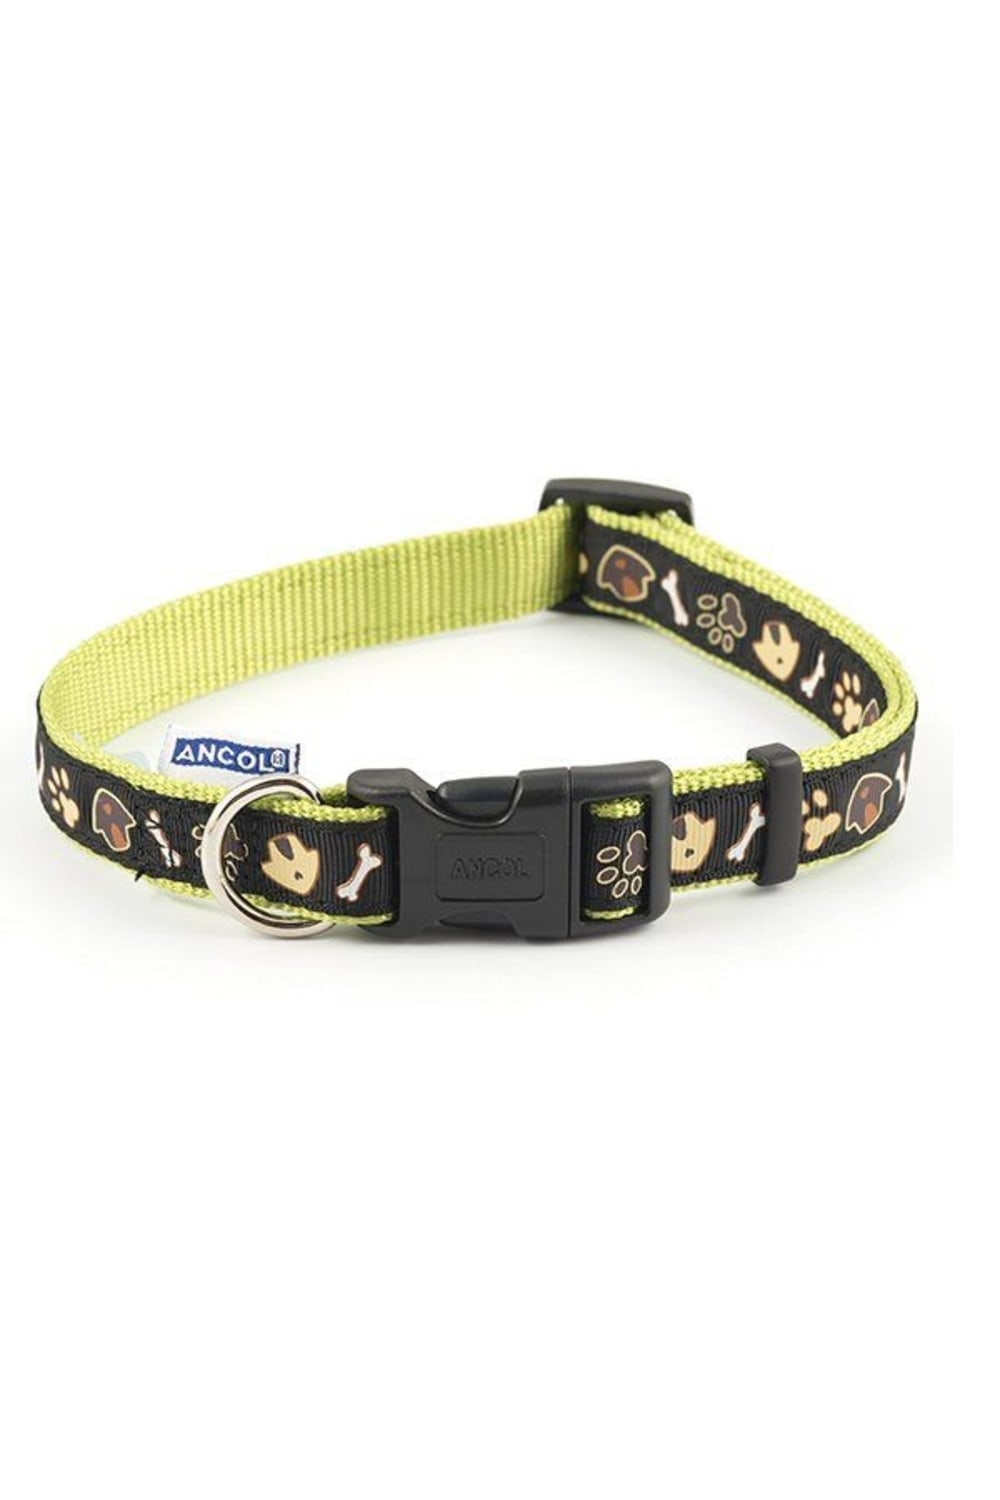 Ancol Nylon Dog & Kennel Collar (Black/Green) (7.8-11.8in)